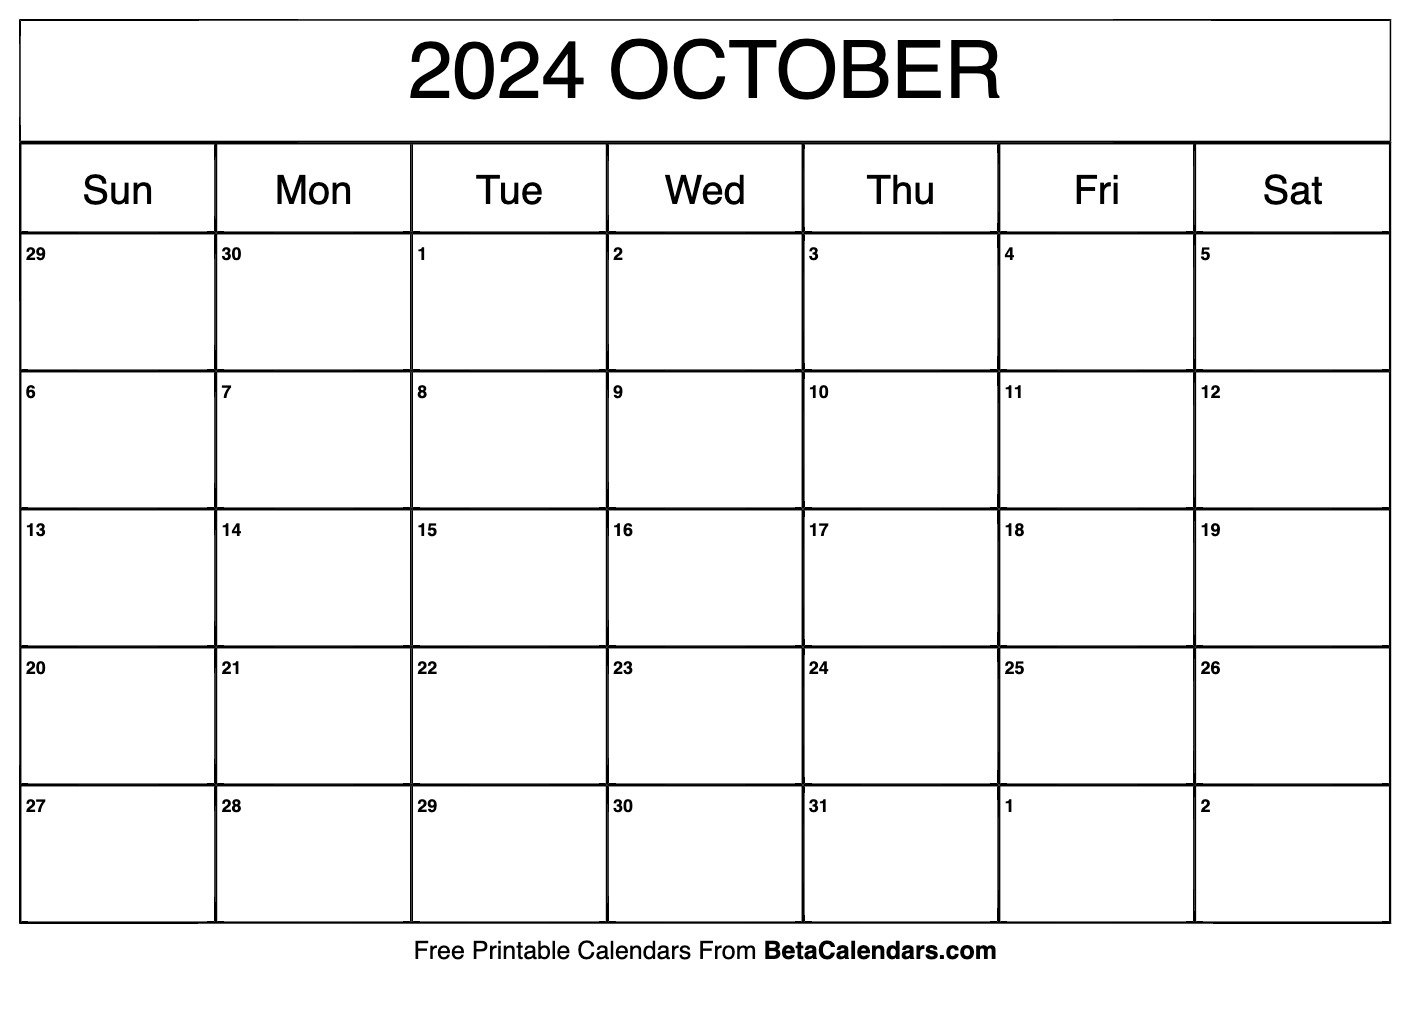 Free Printable October 2024 Calendar pertaining to Free Printable Calendar 2024 October November December